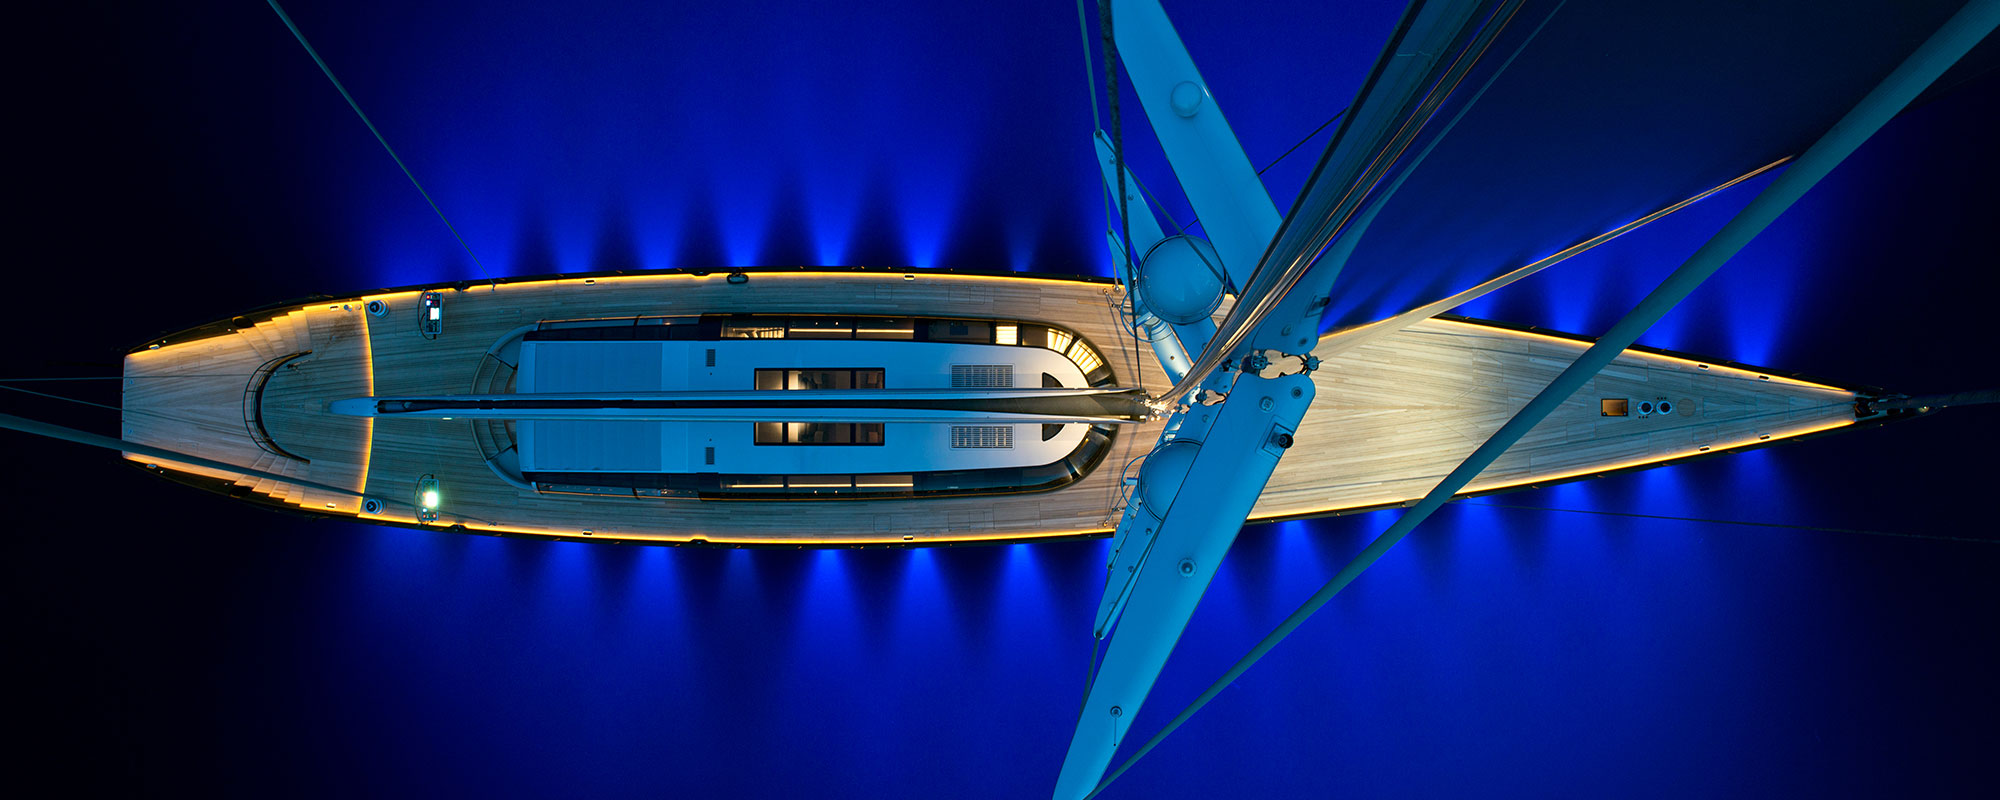 Boat using dark blue led lights